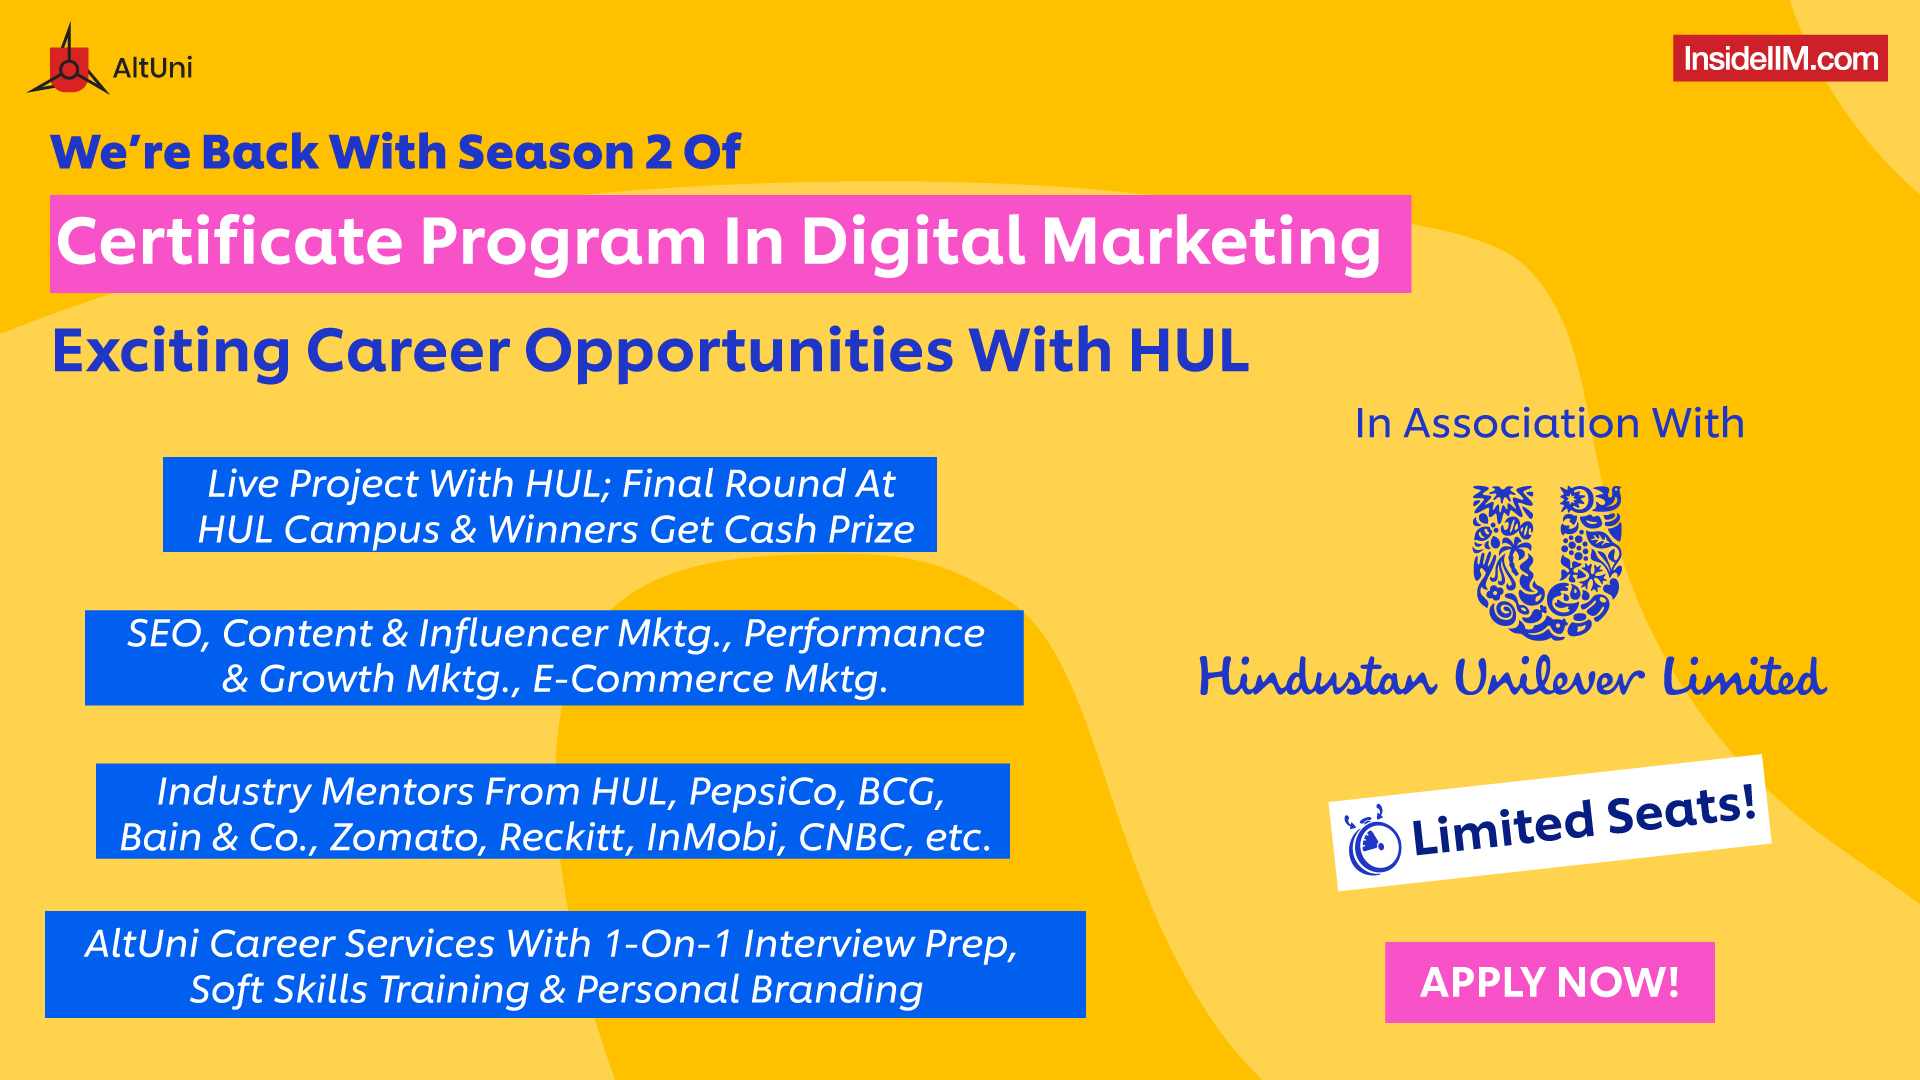 Certificate Program in Digital Marketing with HUL | Season 2